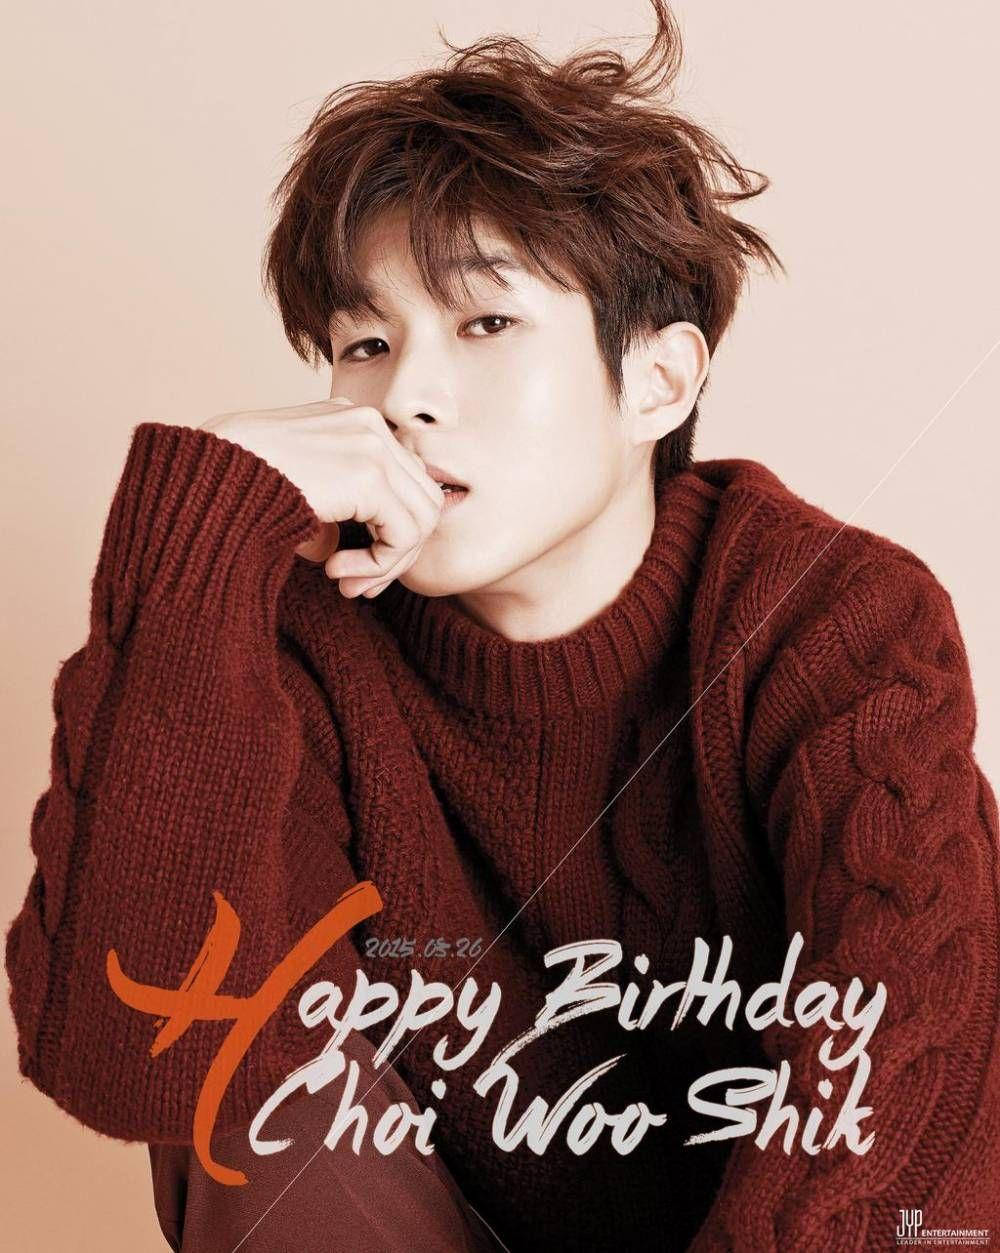 Choi Woo Shik Celebrating Birthday With A Cheerful Smile